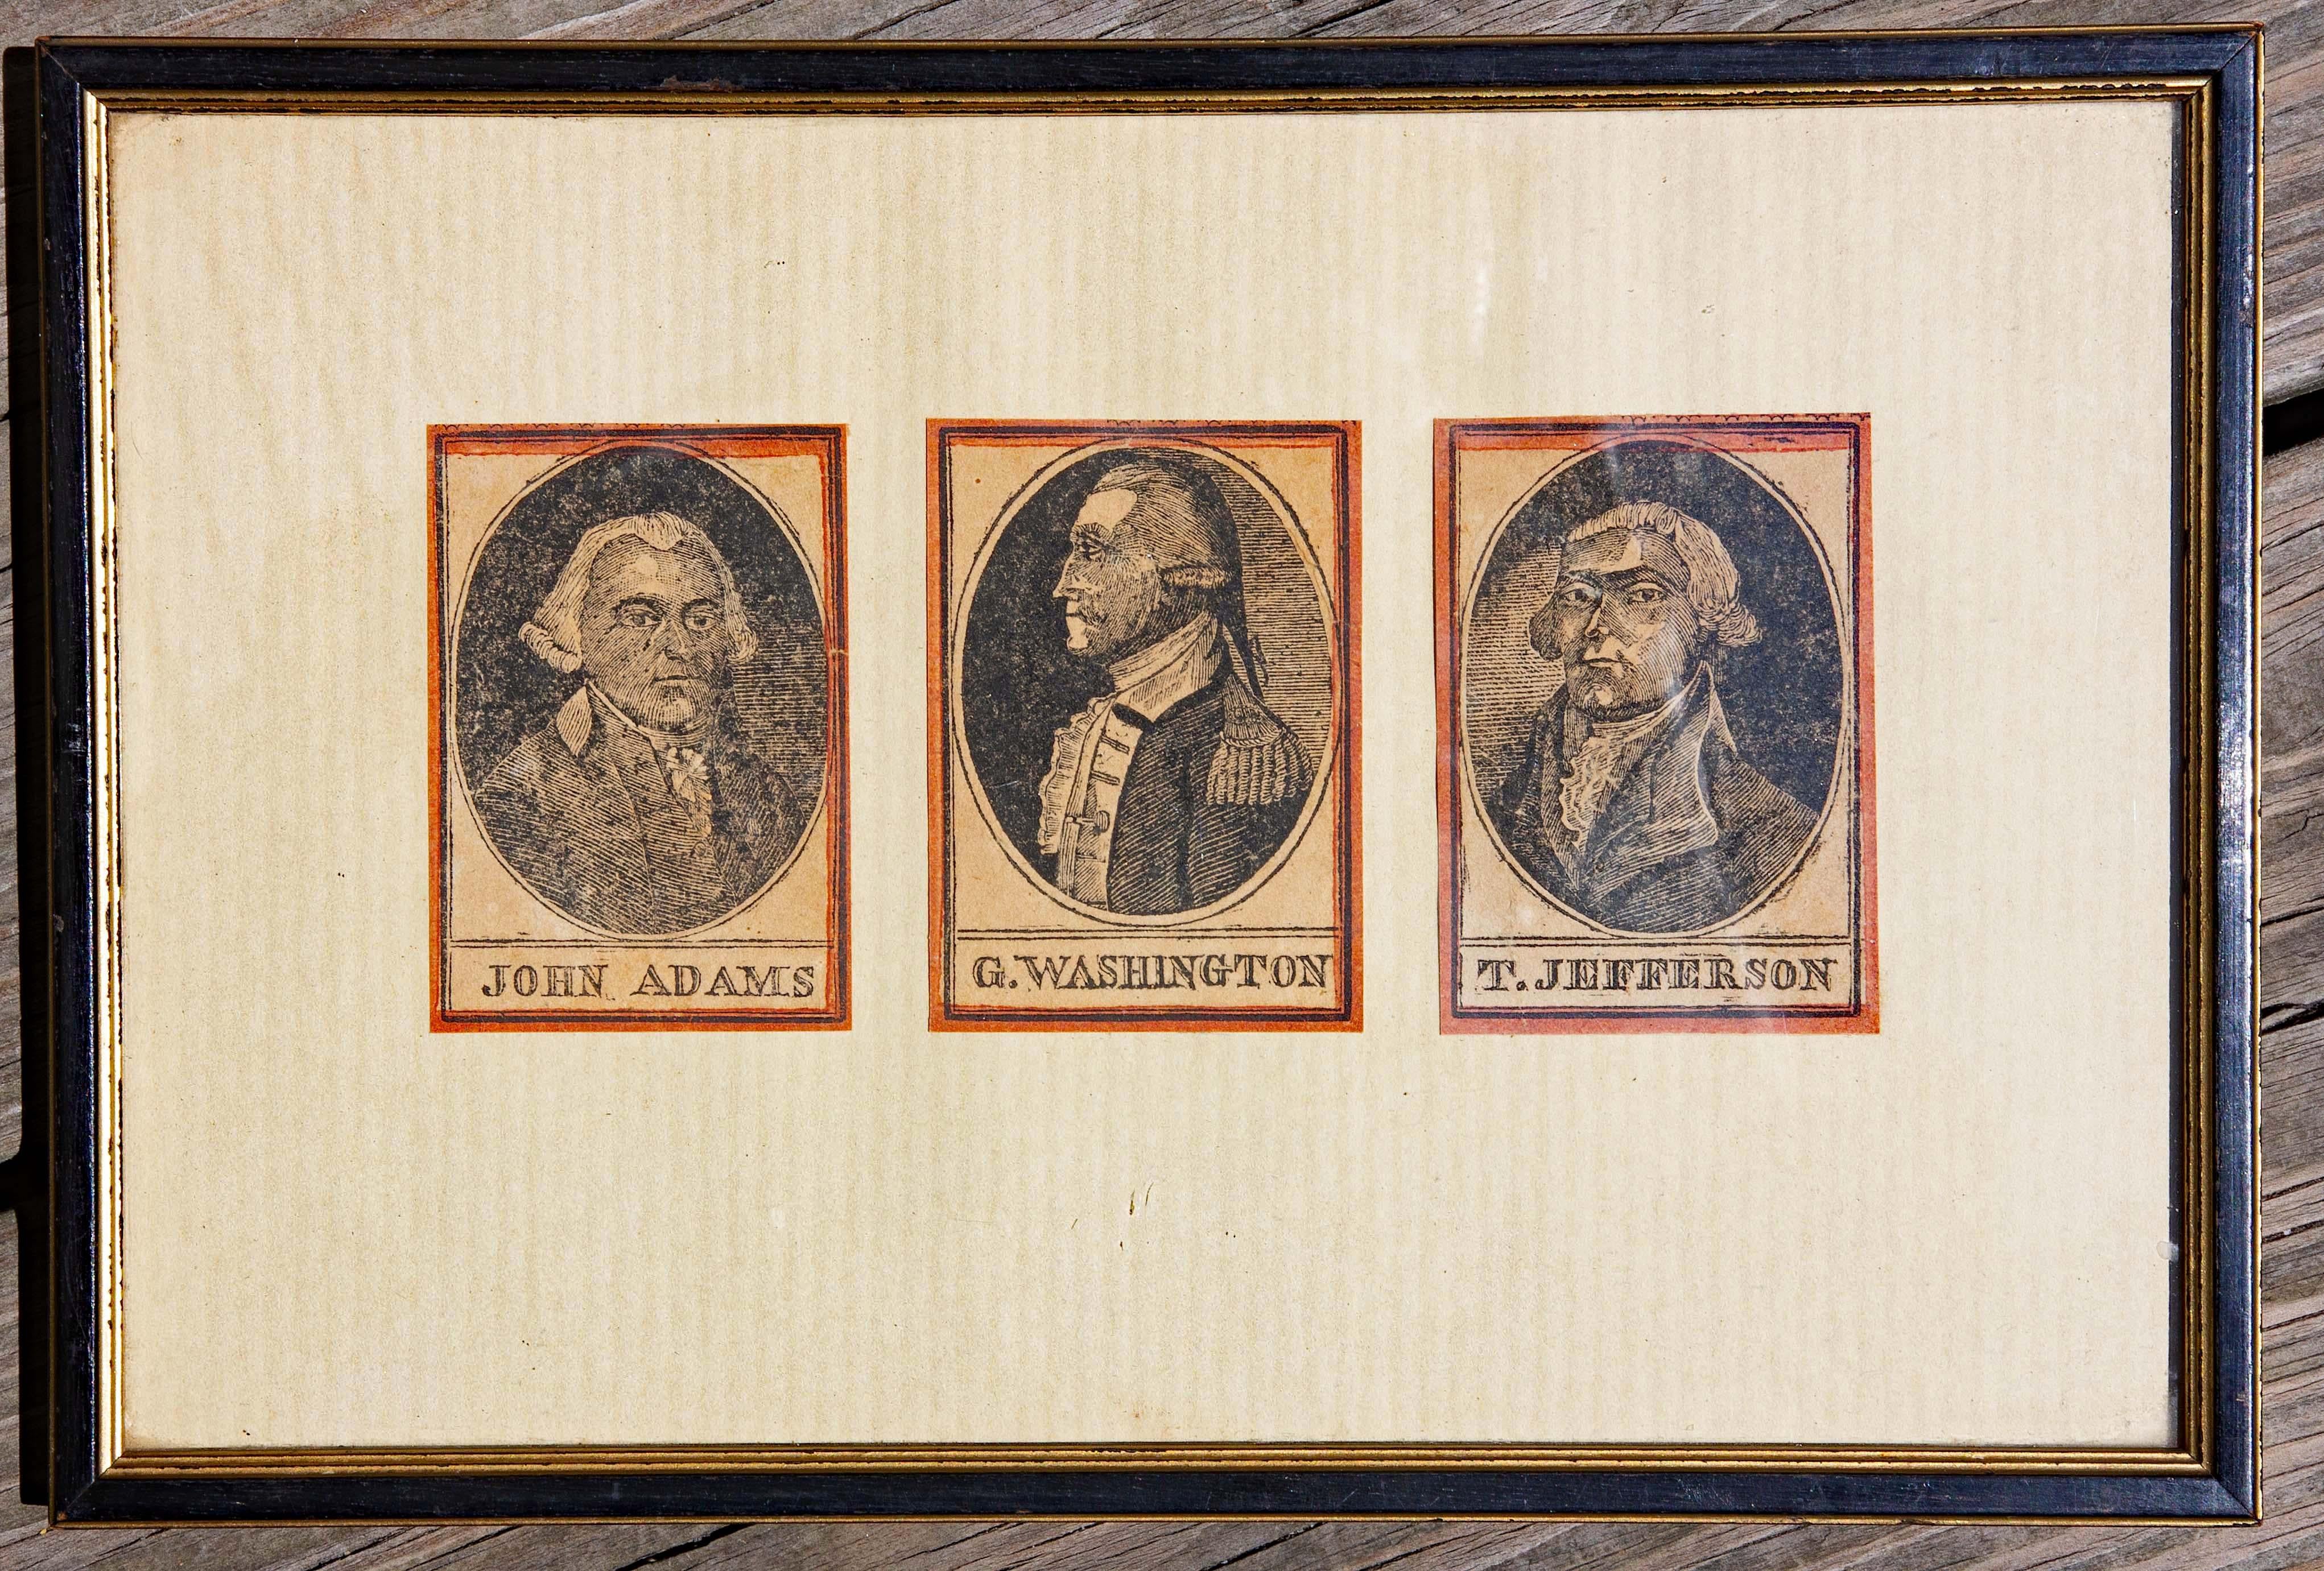 Three 18th century engravings of George Washington, Thomas Jefferson,  and John Adams. Mounted on paper. Each engraving measures 2.75